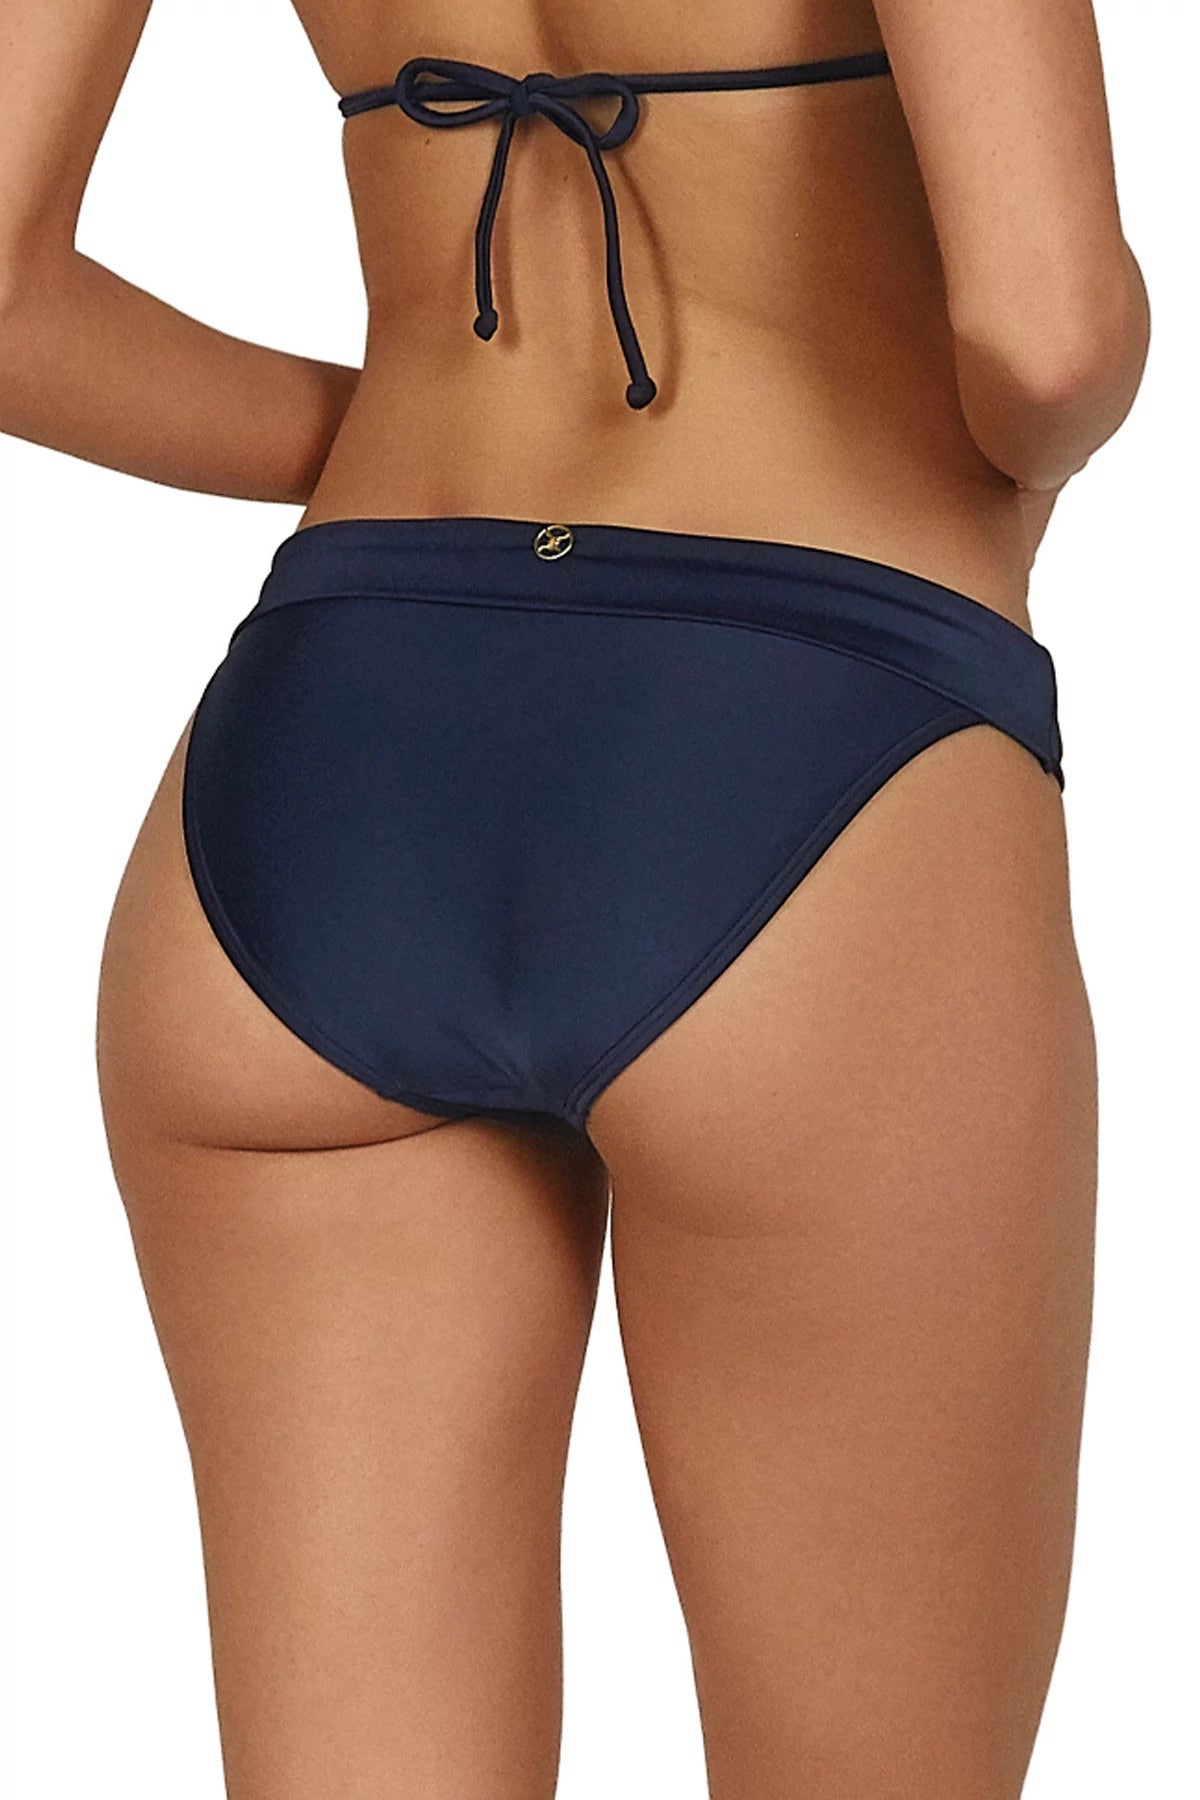 Vix Swimwear Women's Paula Tab Side Hipster Bikini Bottom - Navy